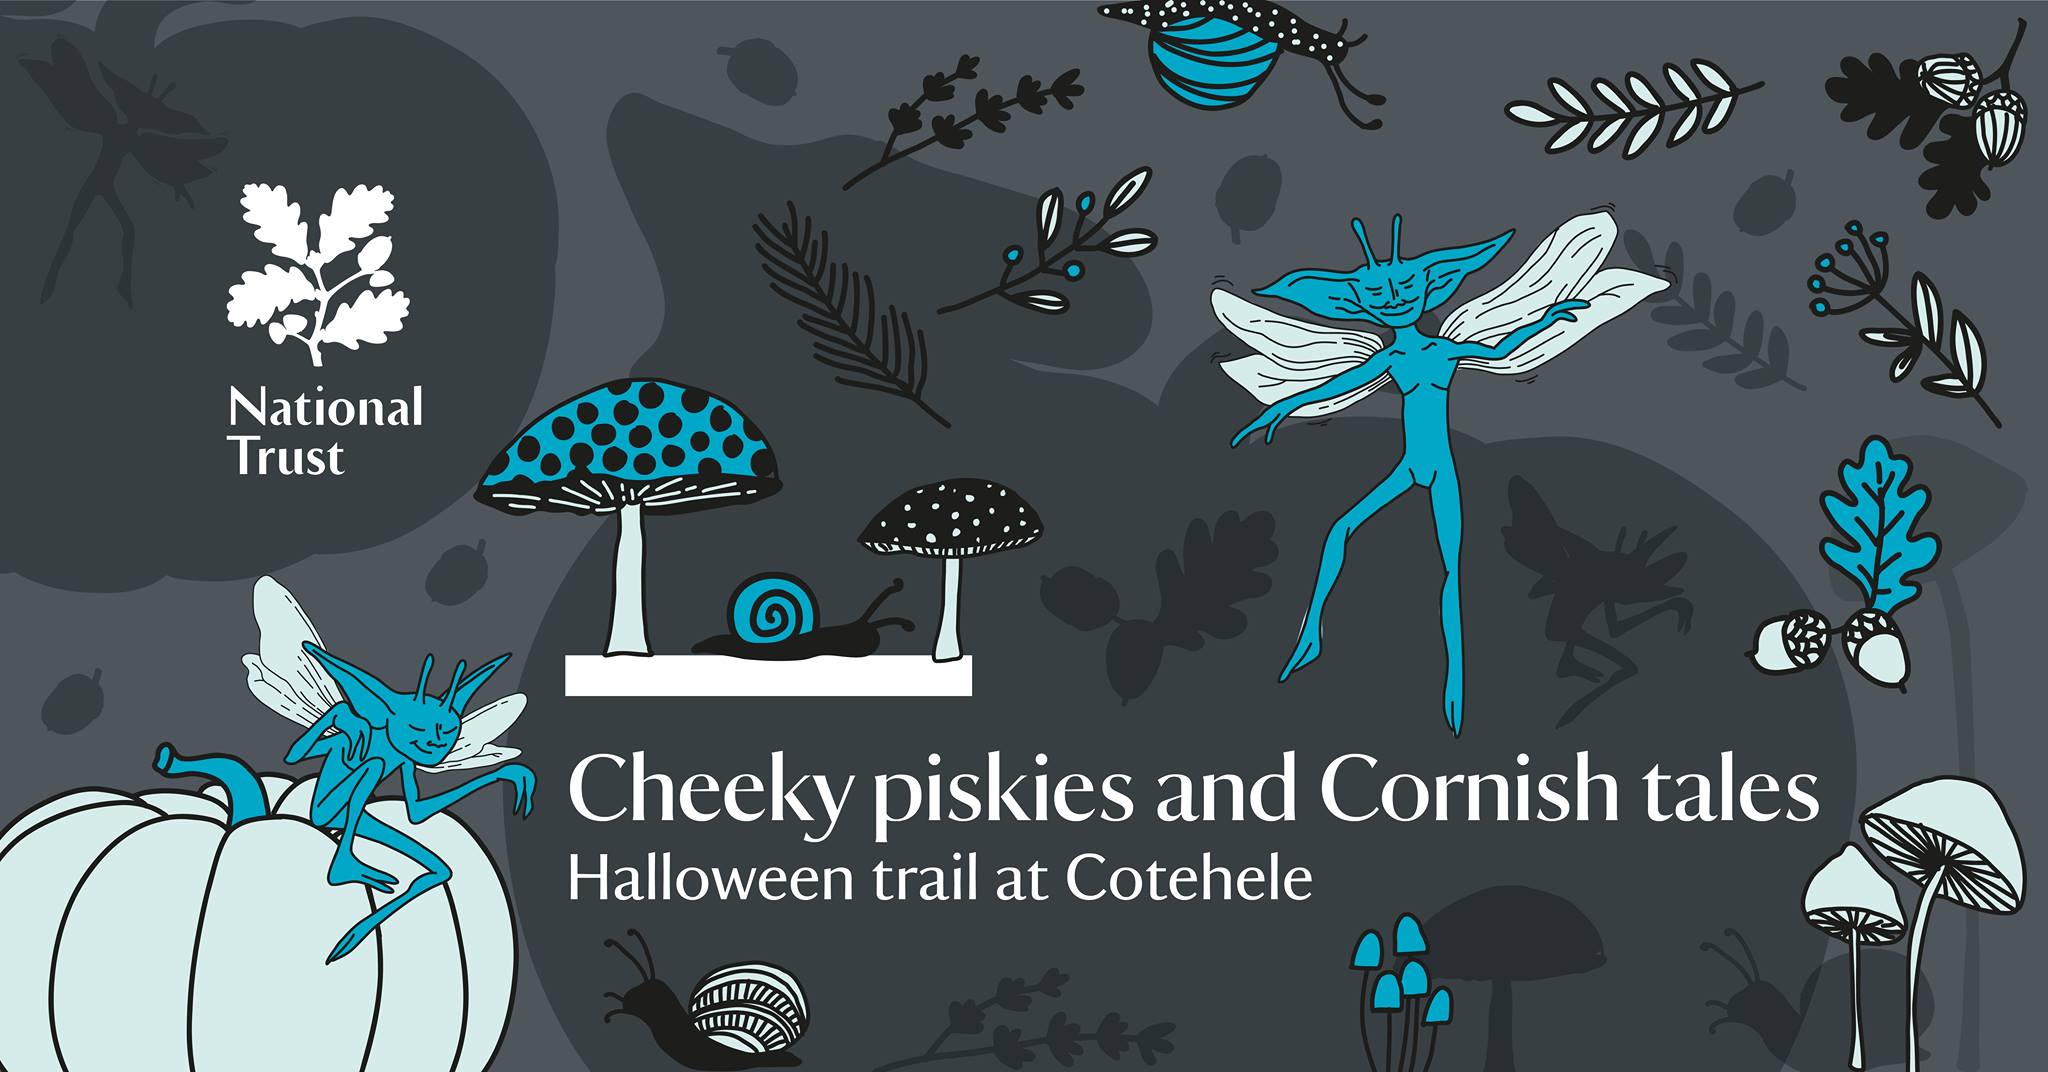 Cheeky piskies and Cornish tales - Halloween trail at Cotehele